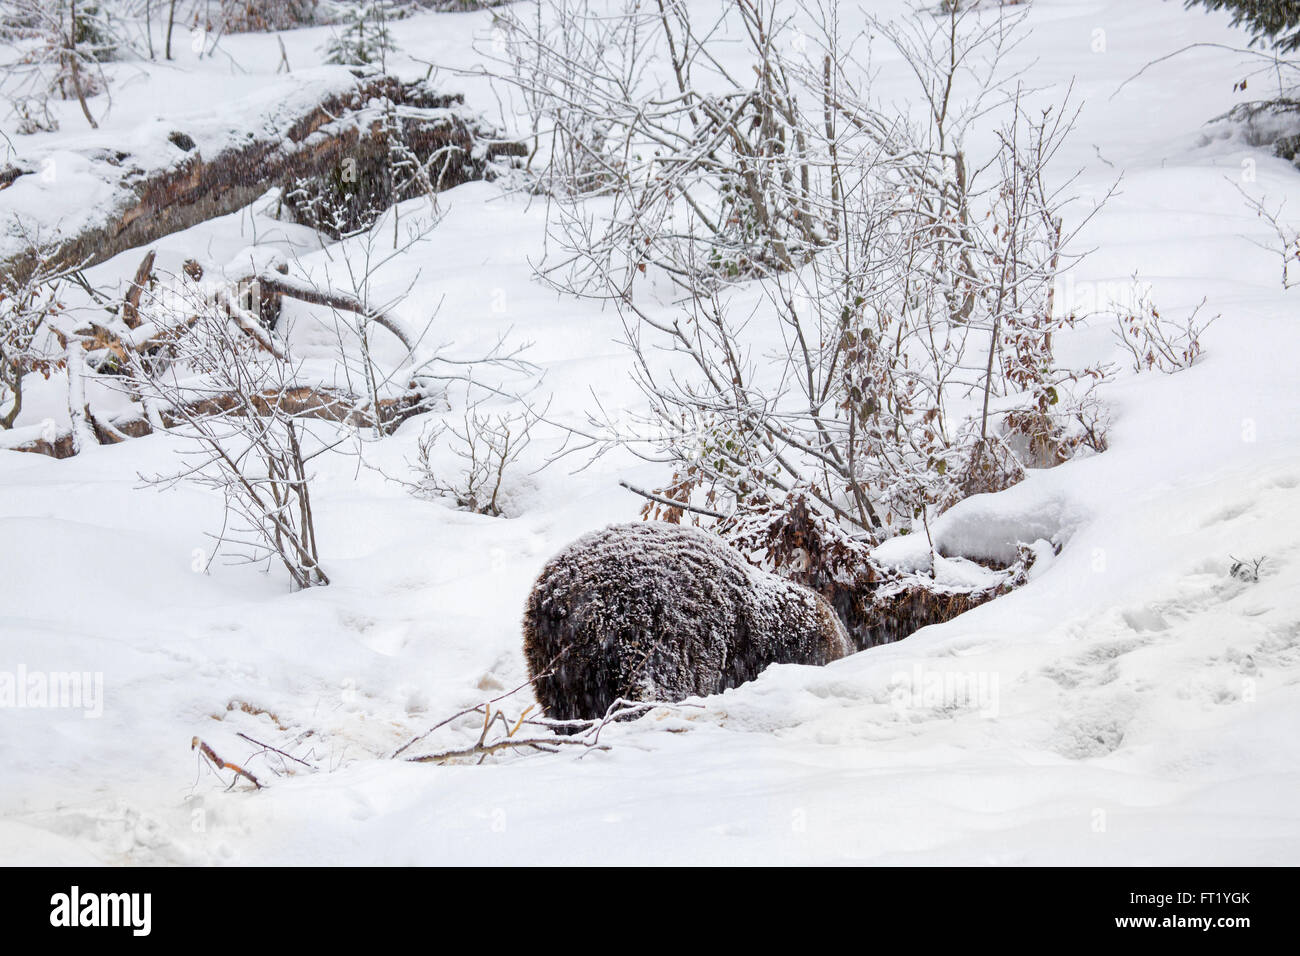 L'orso bruno (Ursus arctos) entrando in den durante la doccia di neve in autunno / inverno Foto Stock